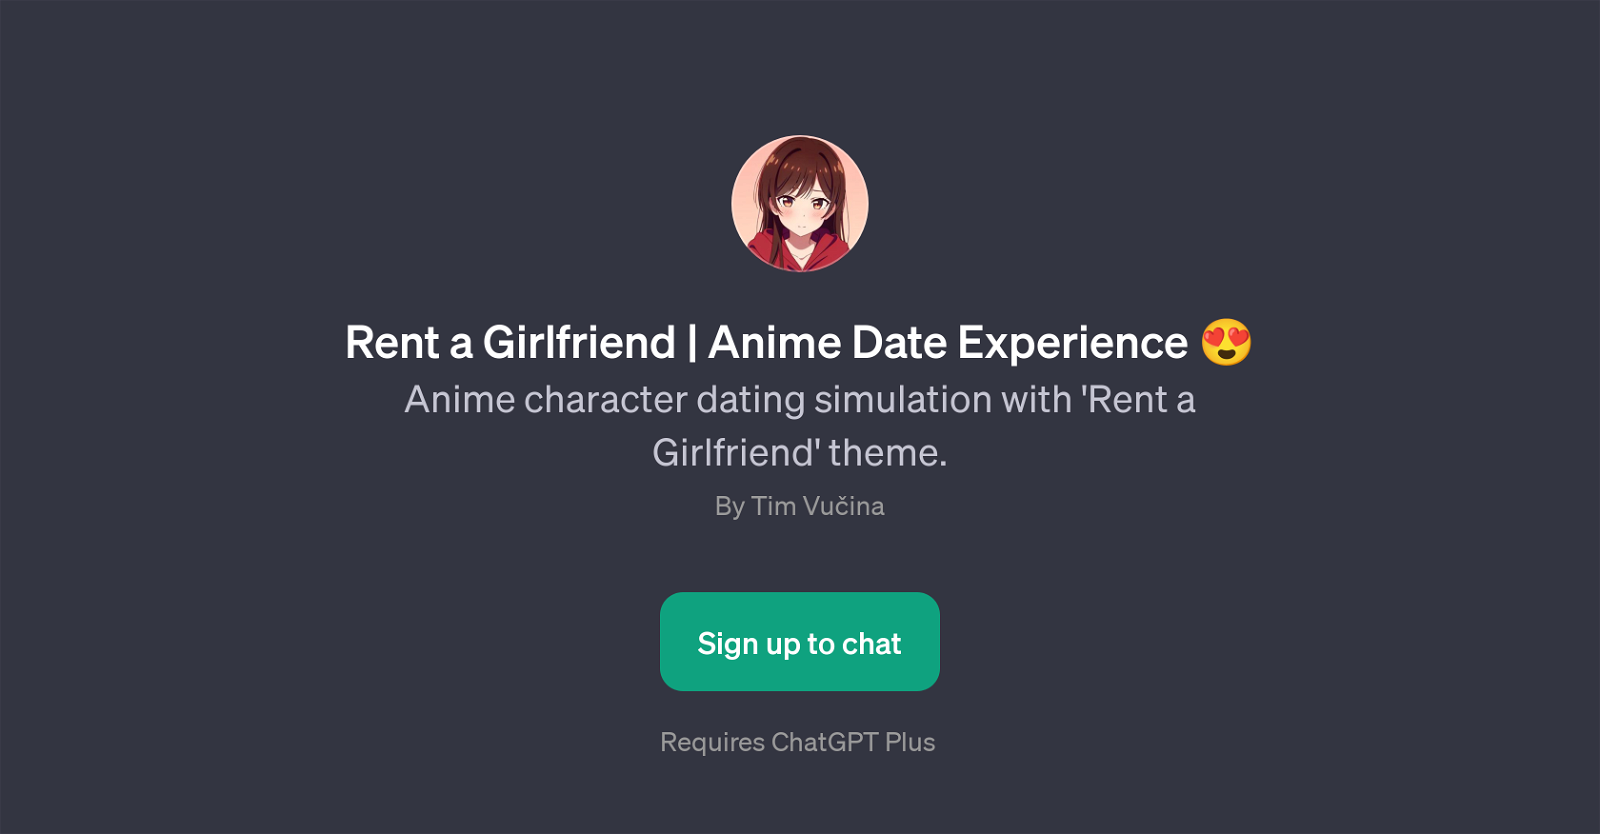 Rent a Girlfriend | Anime Date Experience website